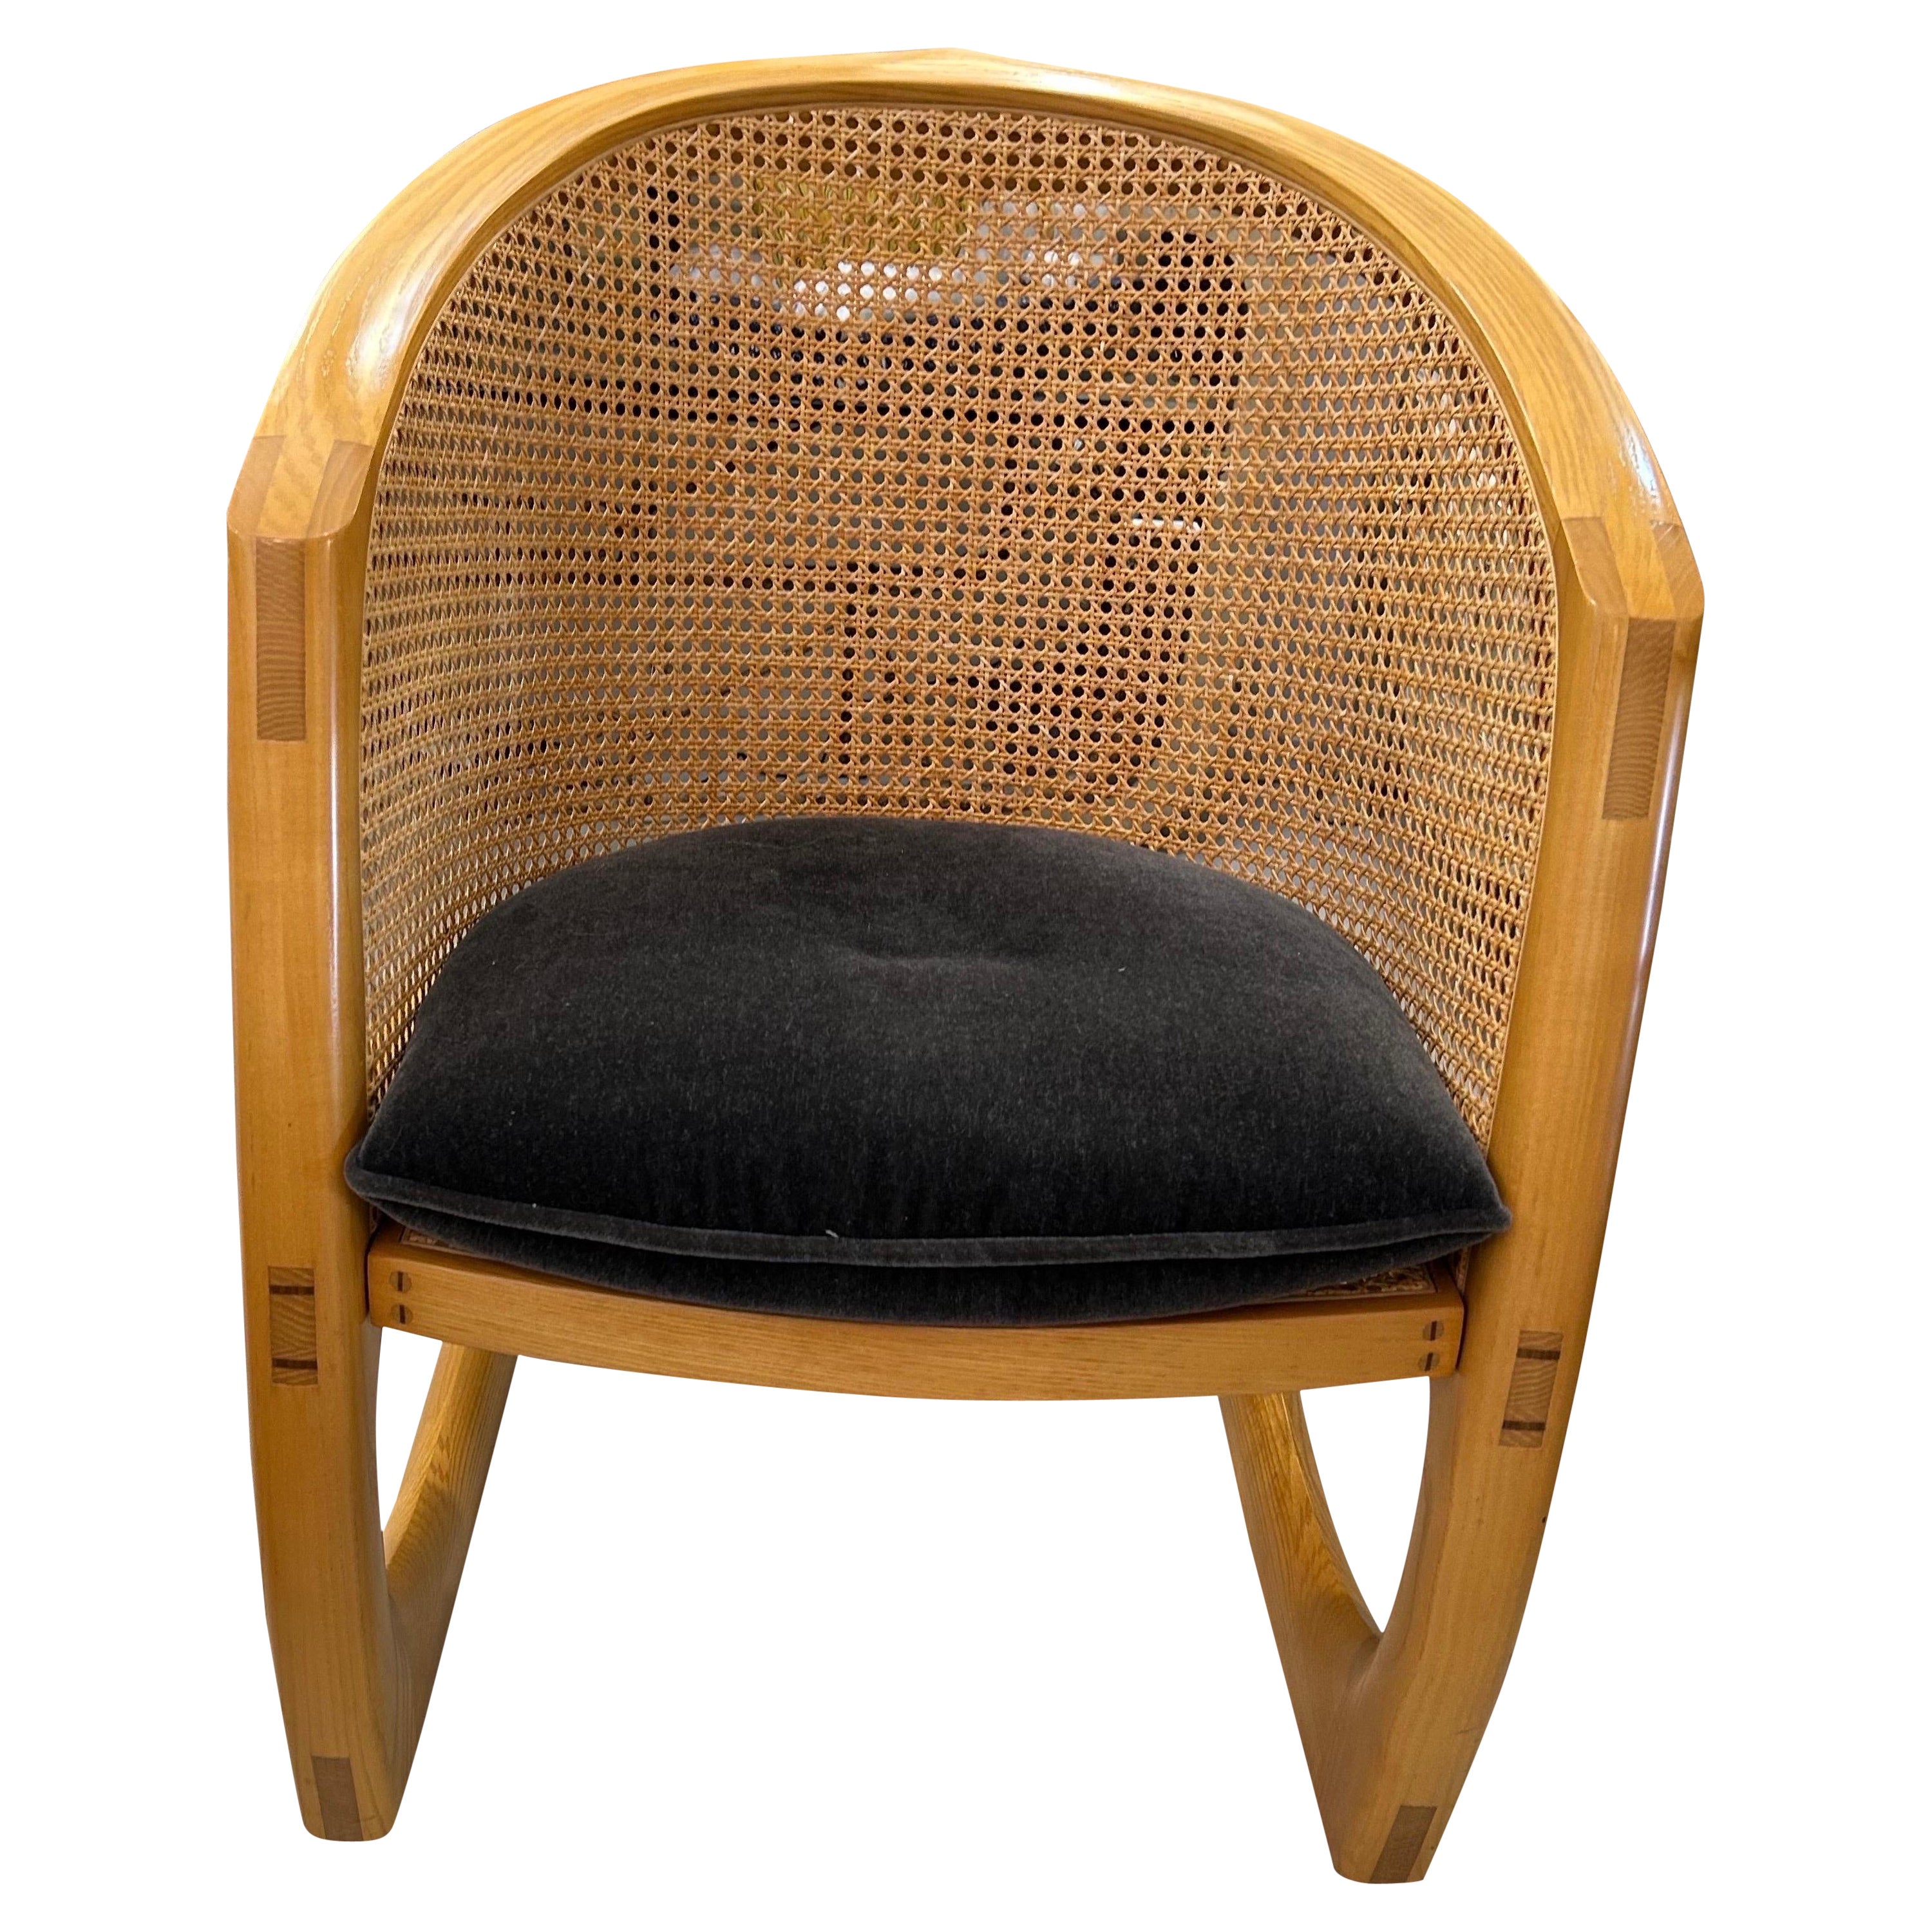 David Ebner sternum rocking chair For Sale